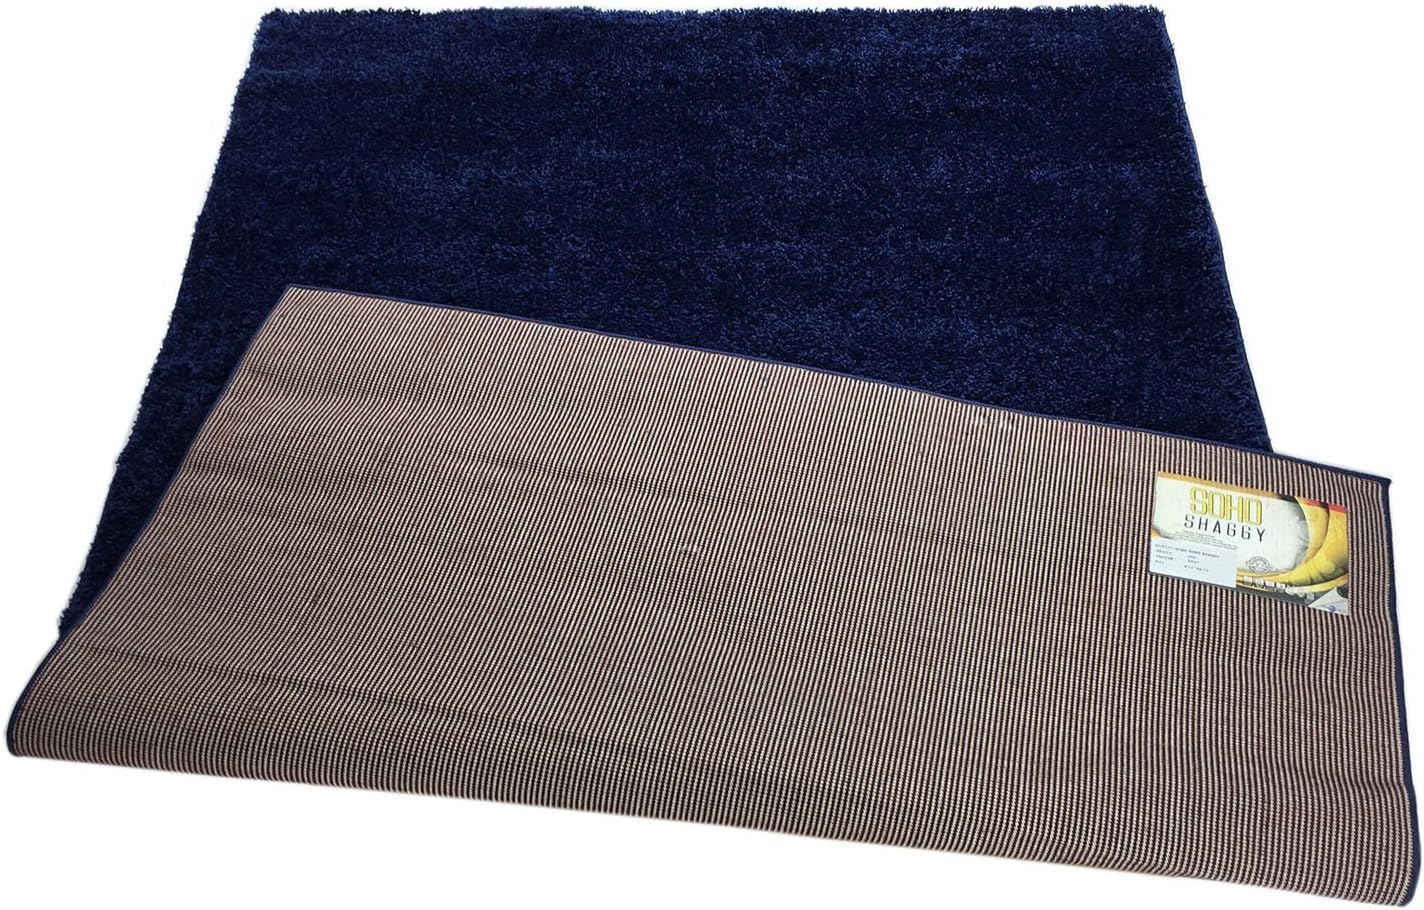 SOHO Shaggy Collection Solid Color Shag Area Rug (Navy Blue, 8 x 10)